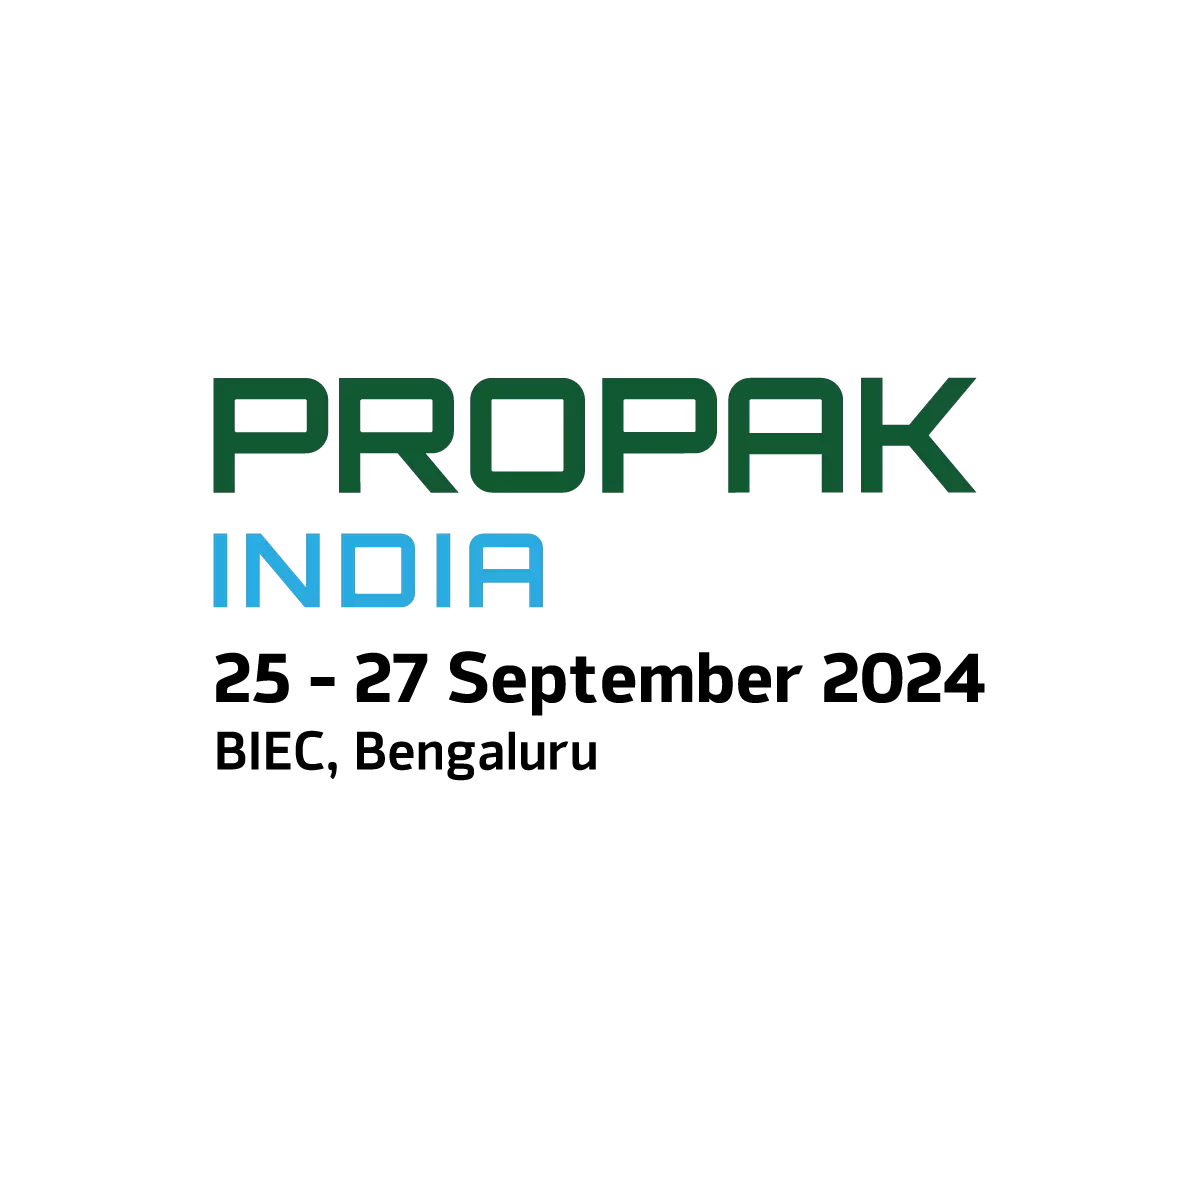 ProPak India 2024